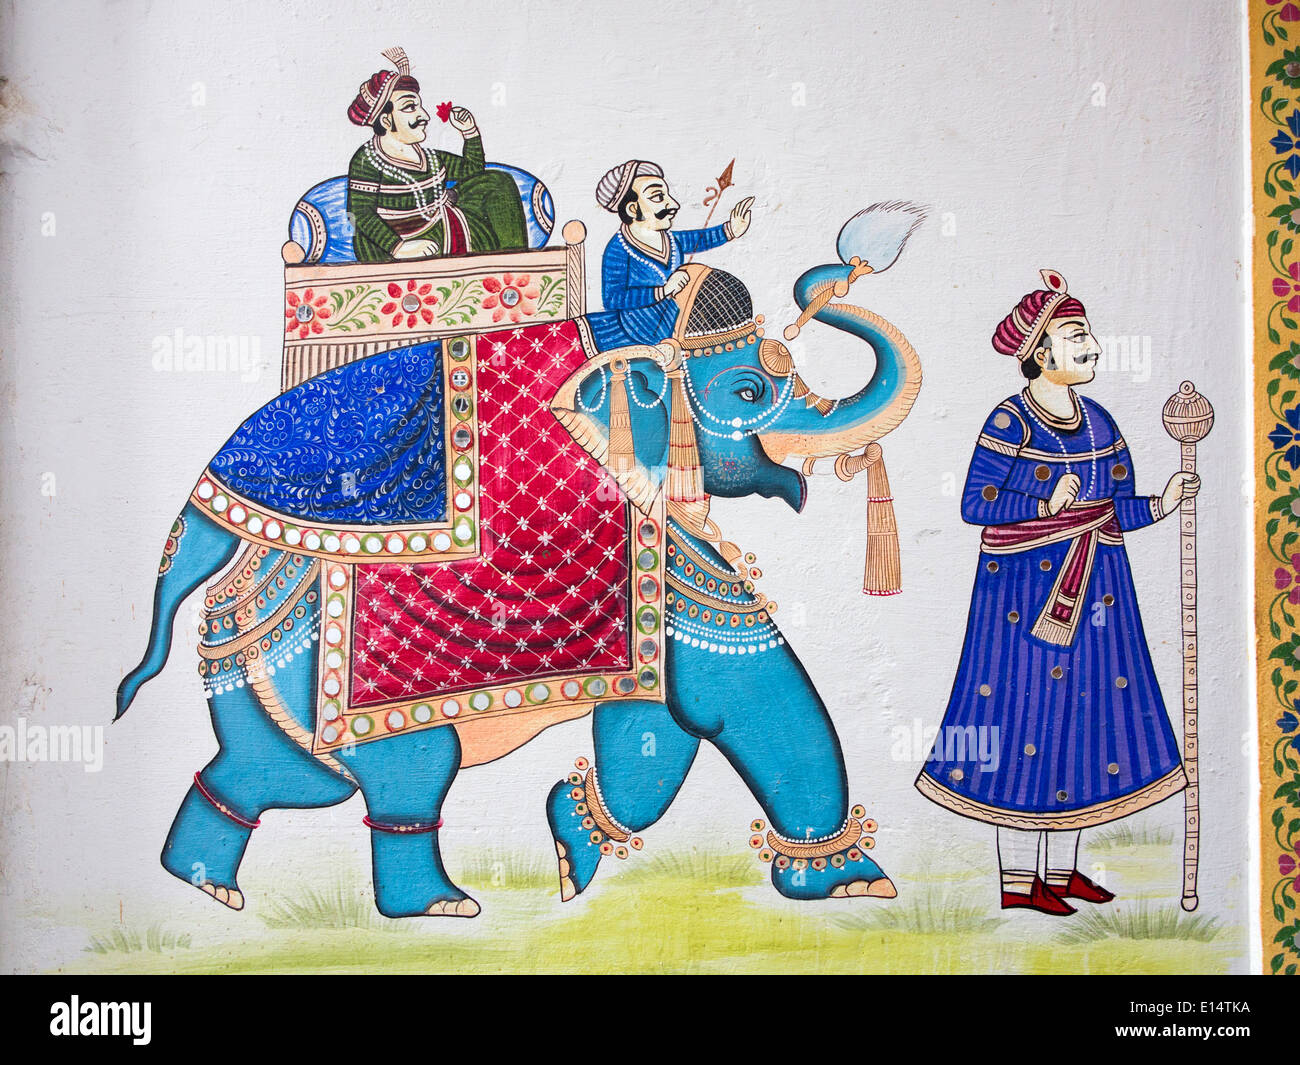 India Rajasthan, Udaipur, Rajasthani arte popolare, pittura murale di Rajput uomo su elefante con fiore Foto Stock